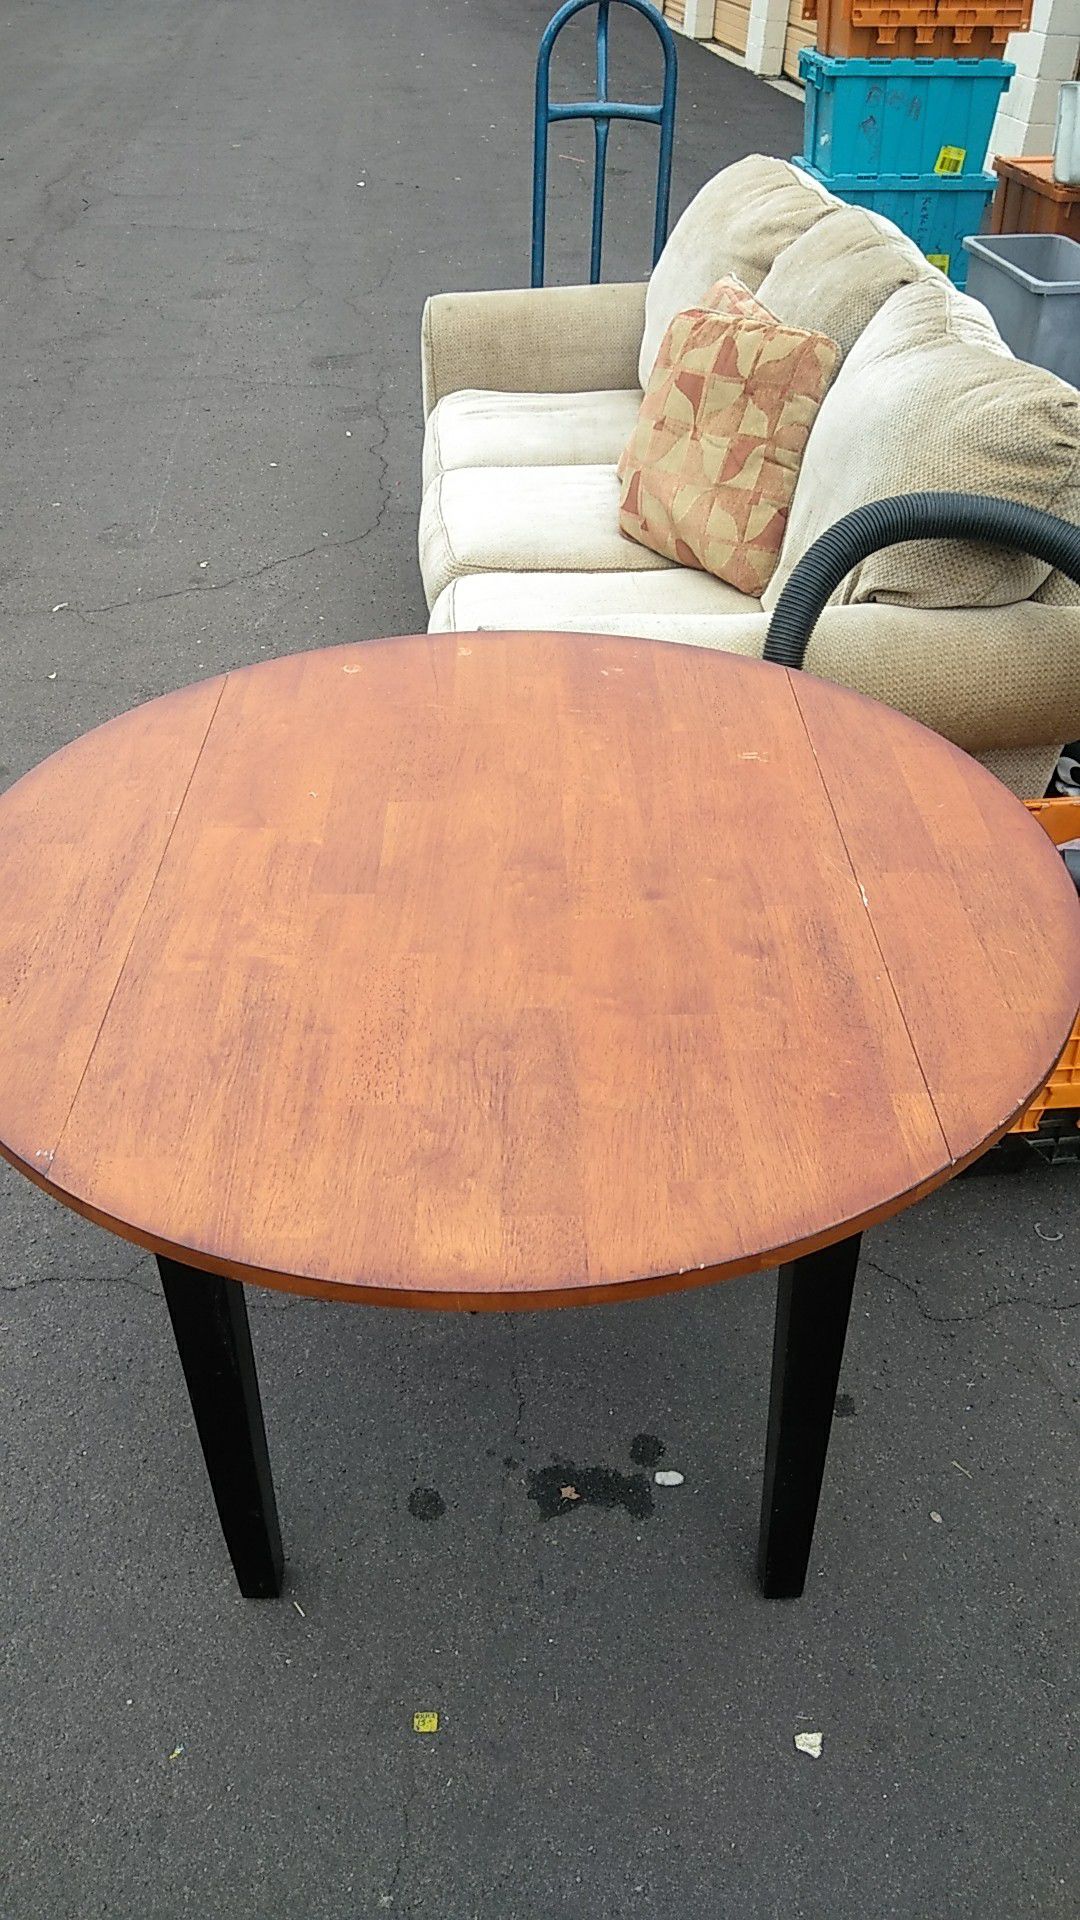 Antique drop leap solid wood table